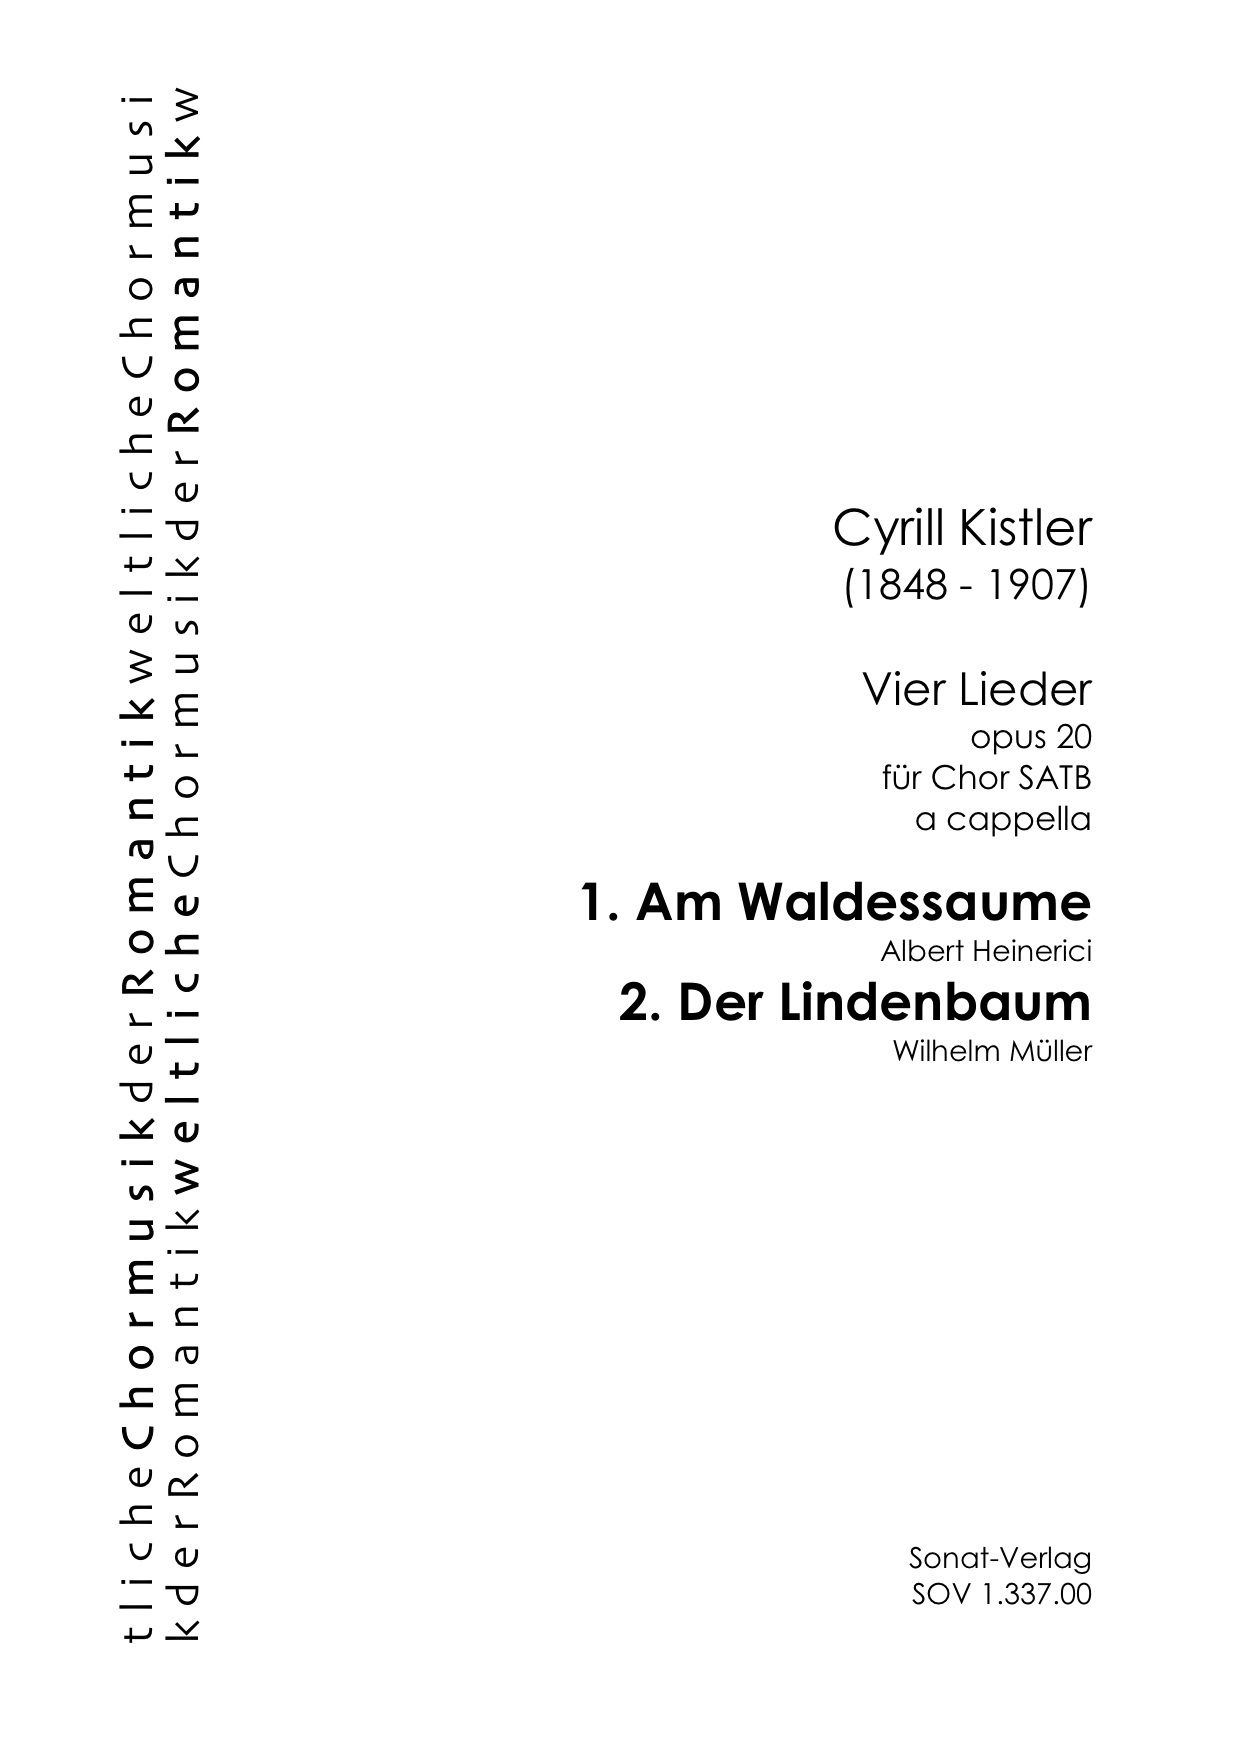 Kistler, C. (1848-1907): Am Waldessaume / Der Lindenbaum